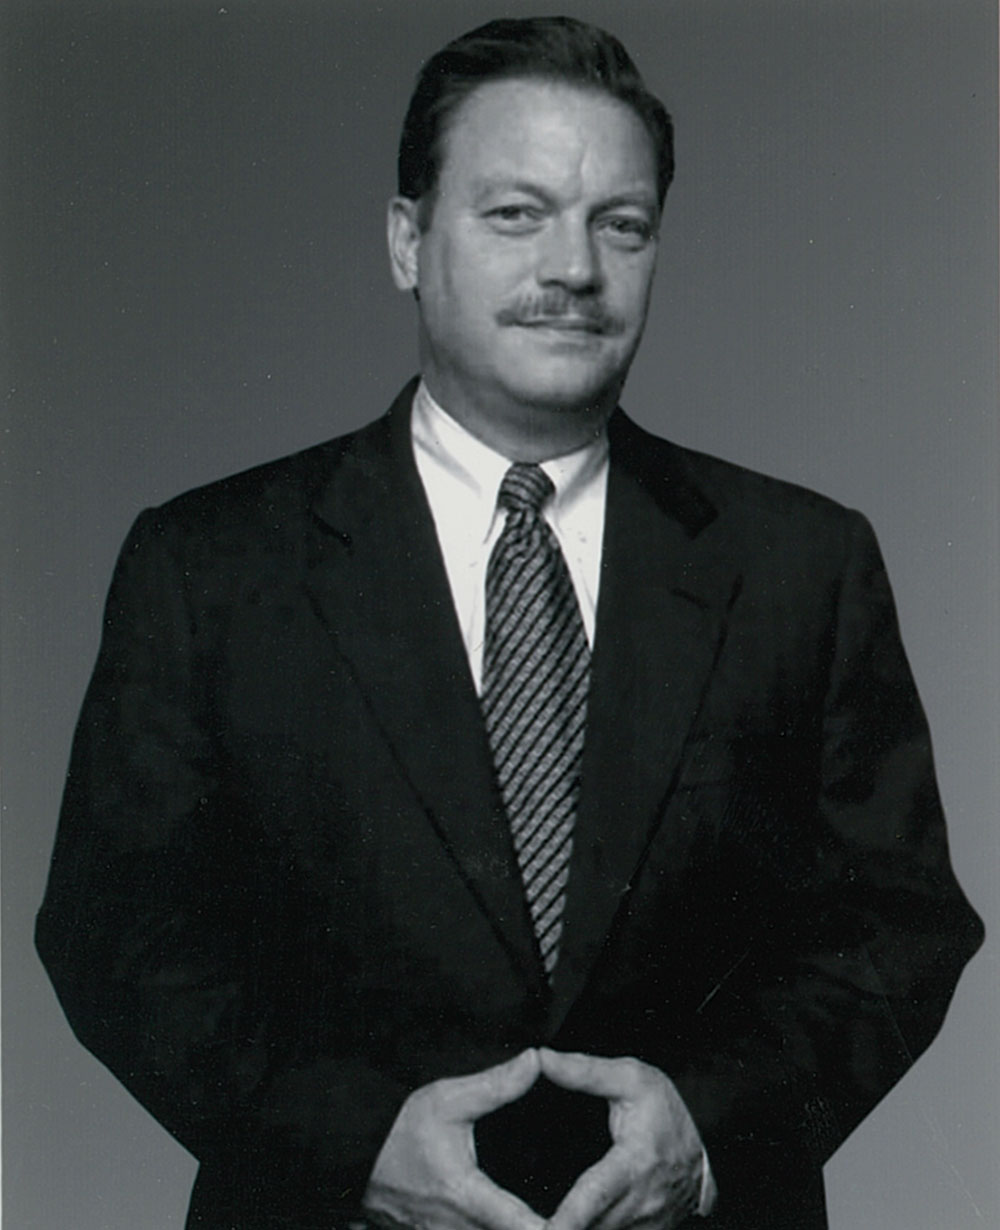 Reed Bolton Byrum Sr., PRSA President of 2003